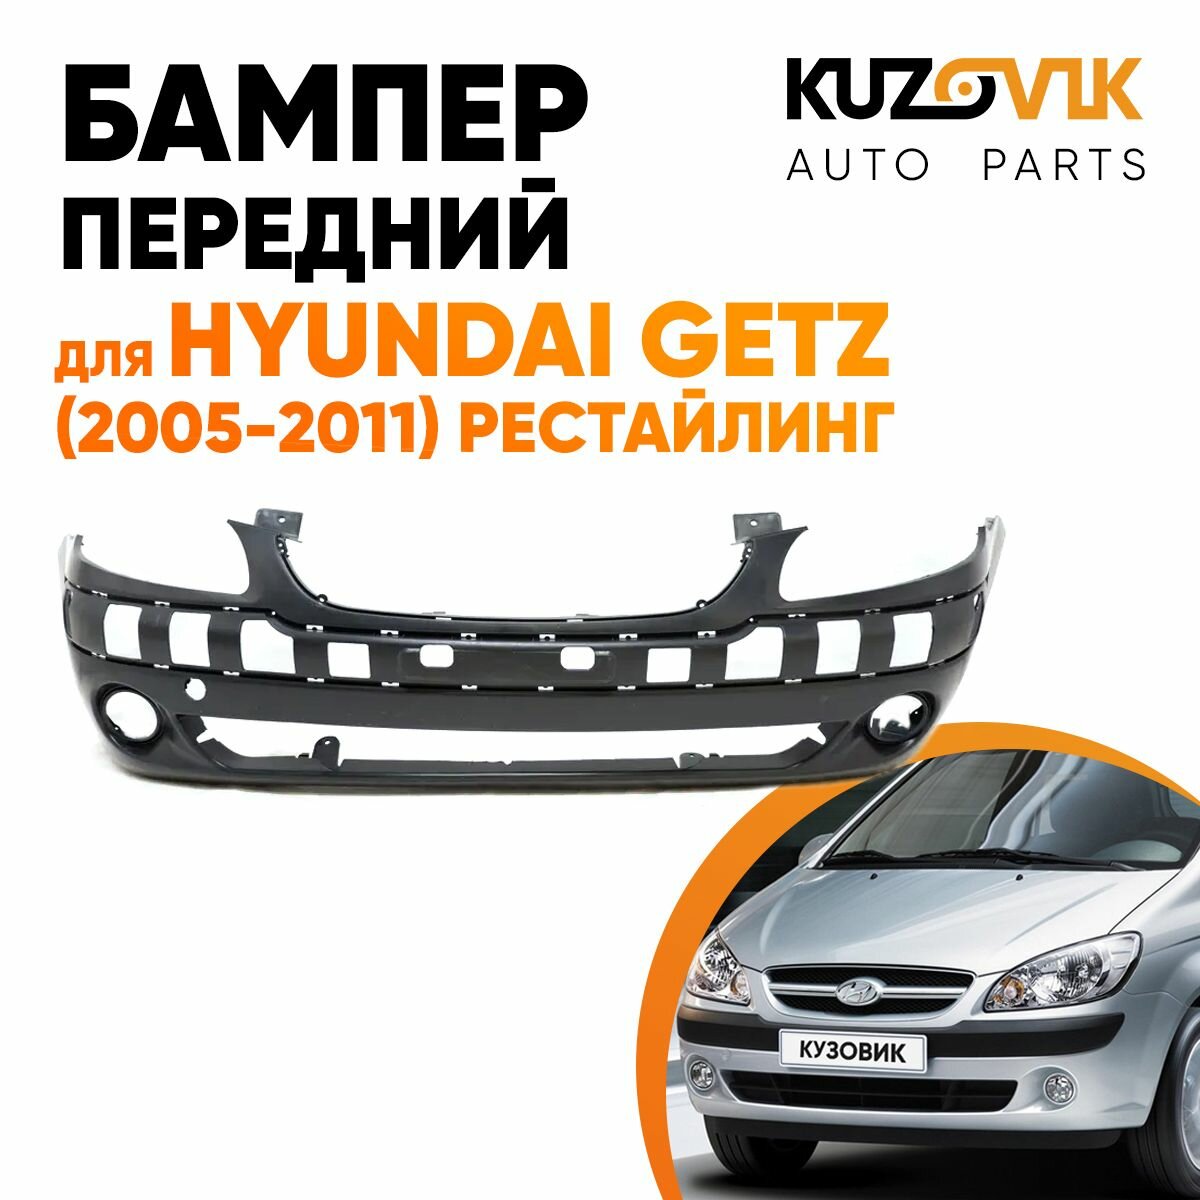 Бампер передний Hyundai Getz (2005-2011) рестайлинг под птф